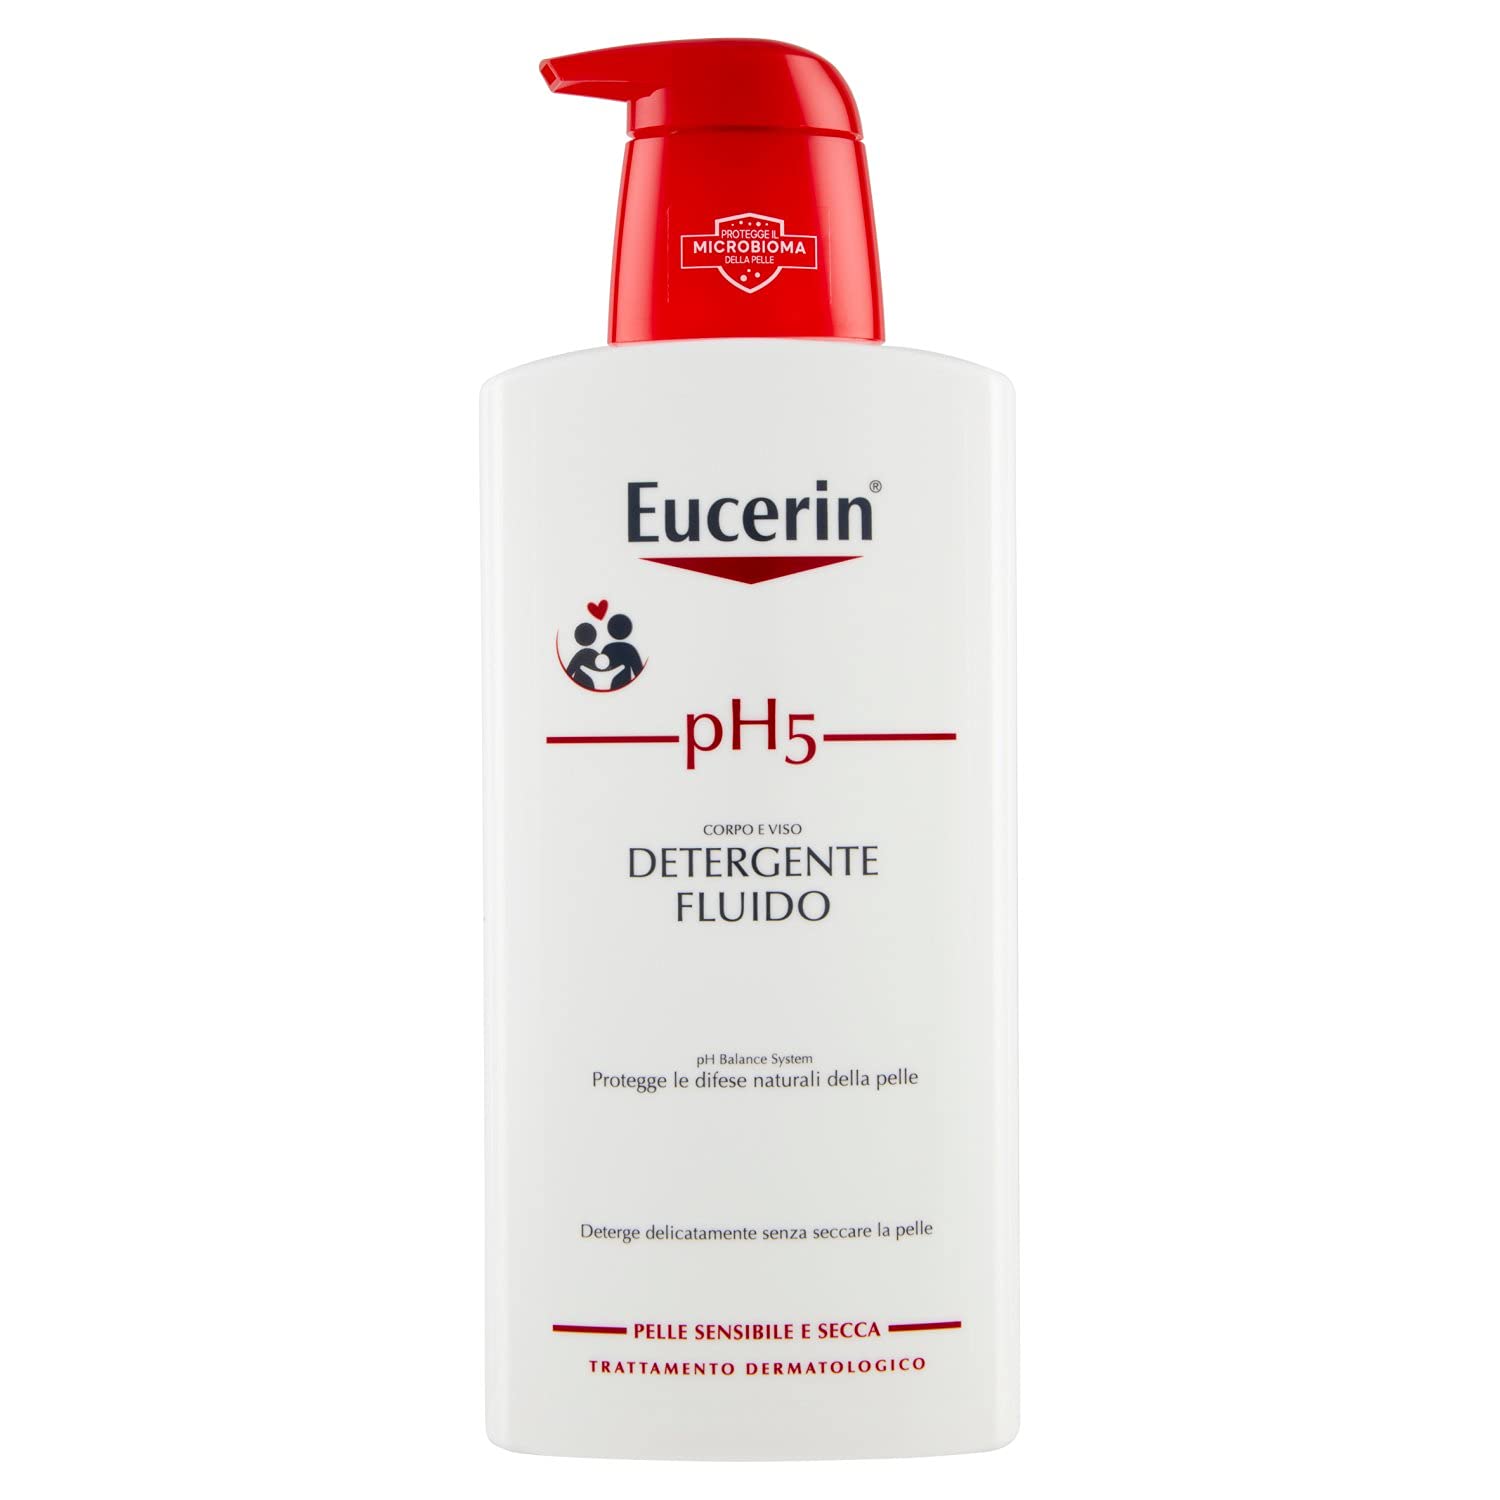 Eucerin Ph5 fluid cleansing 400 ml